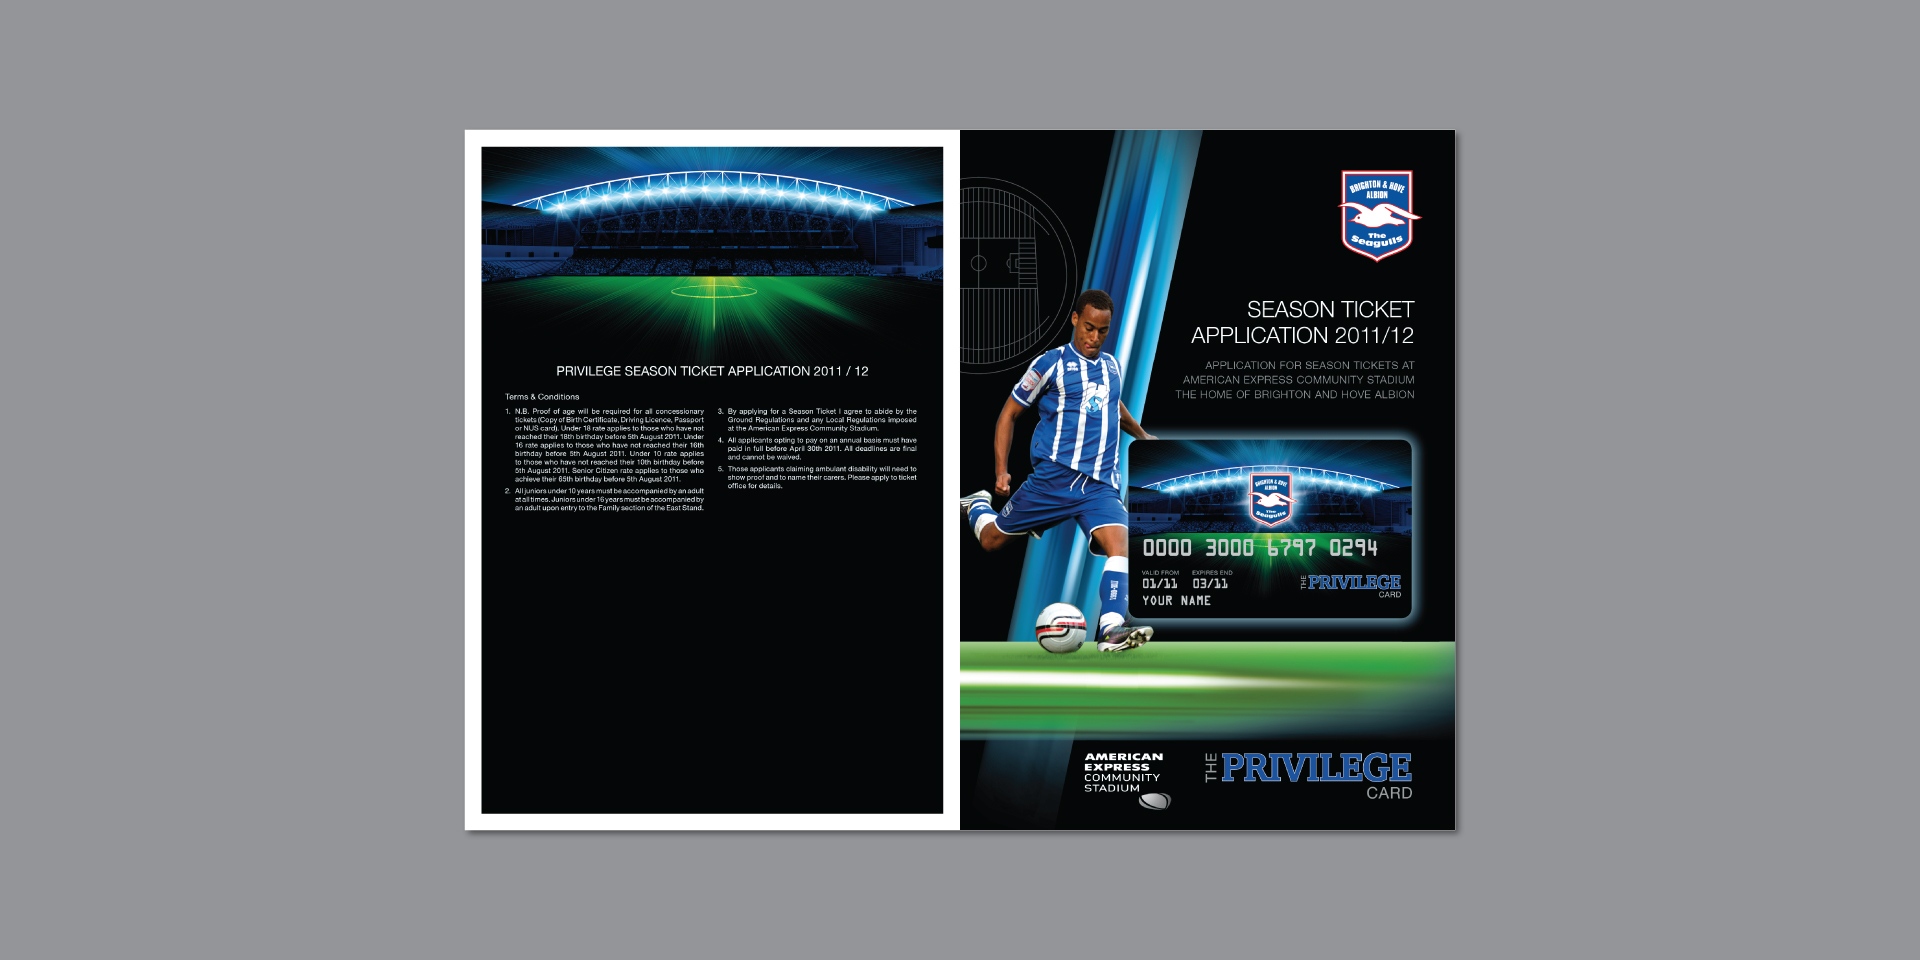 Brighton & Hove Albion Season Ticket Application Form design